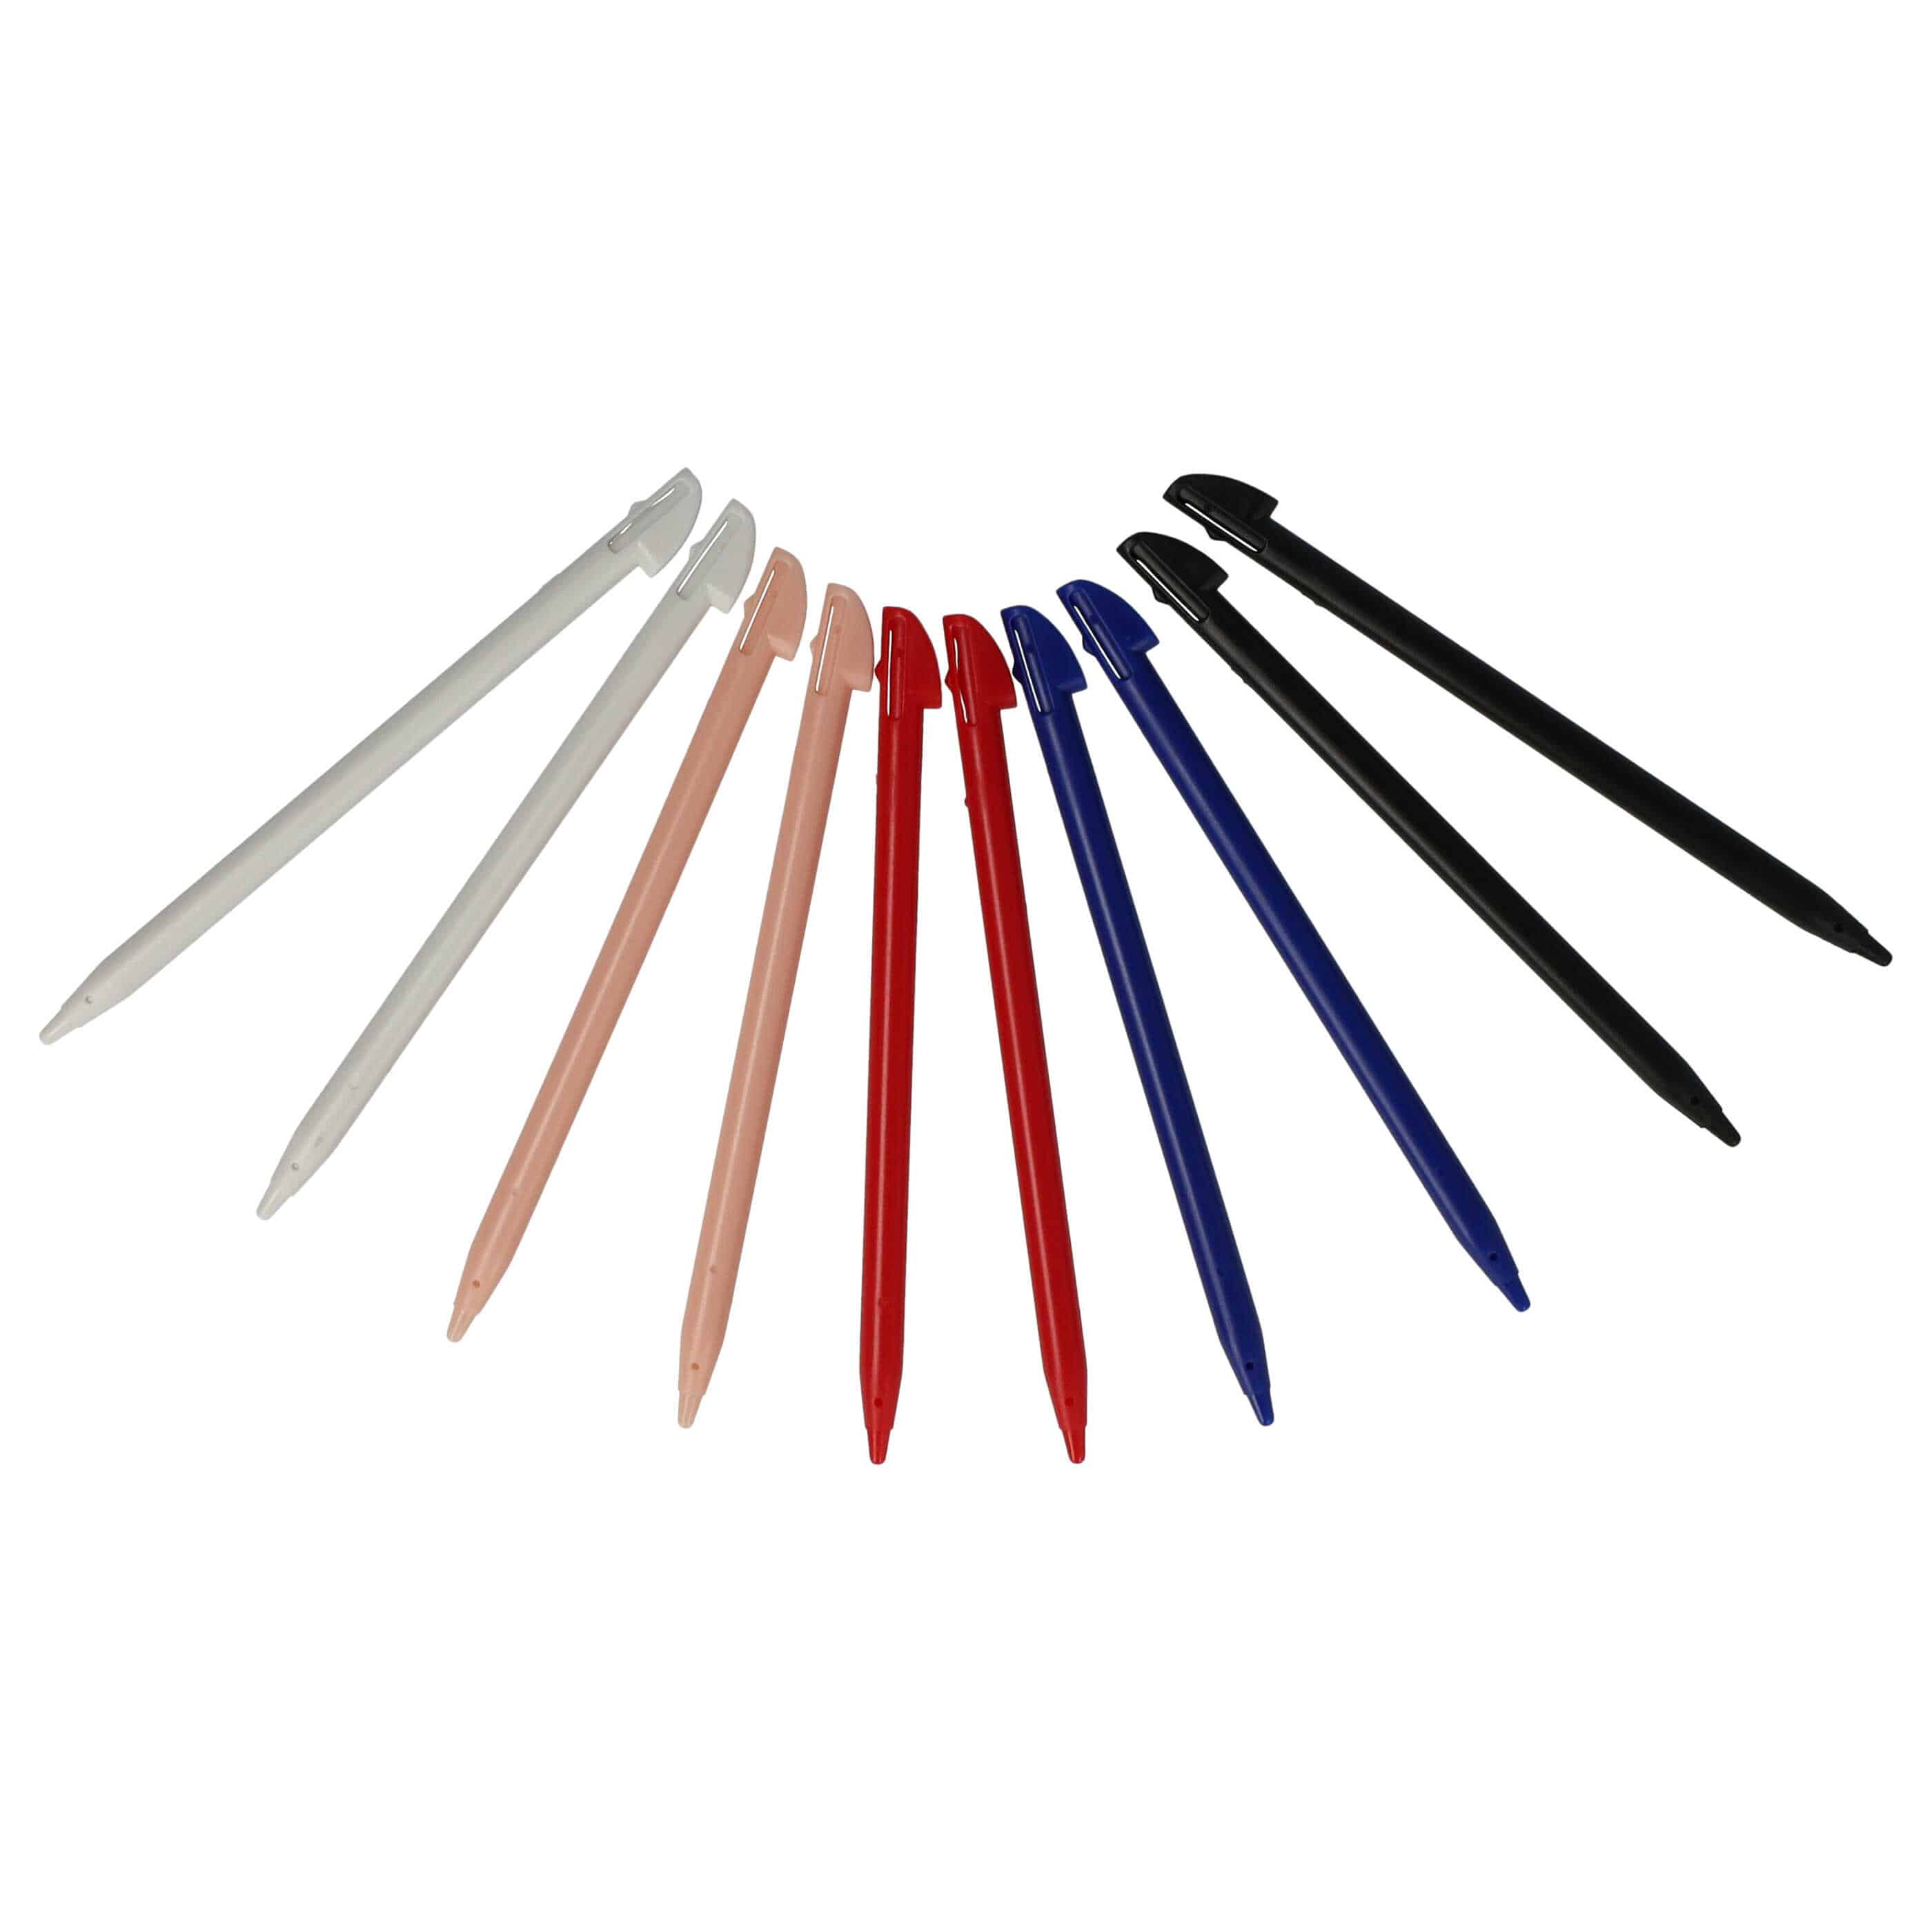 10x lápices compatible con Nintendo 3DS XL consola de juego - negro, rosa, blanco, azul, rojo